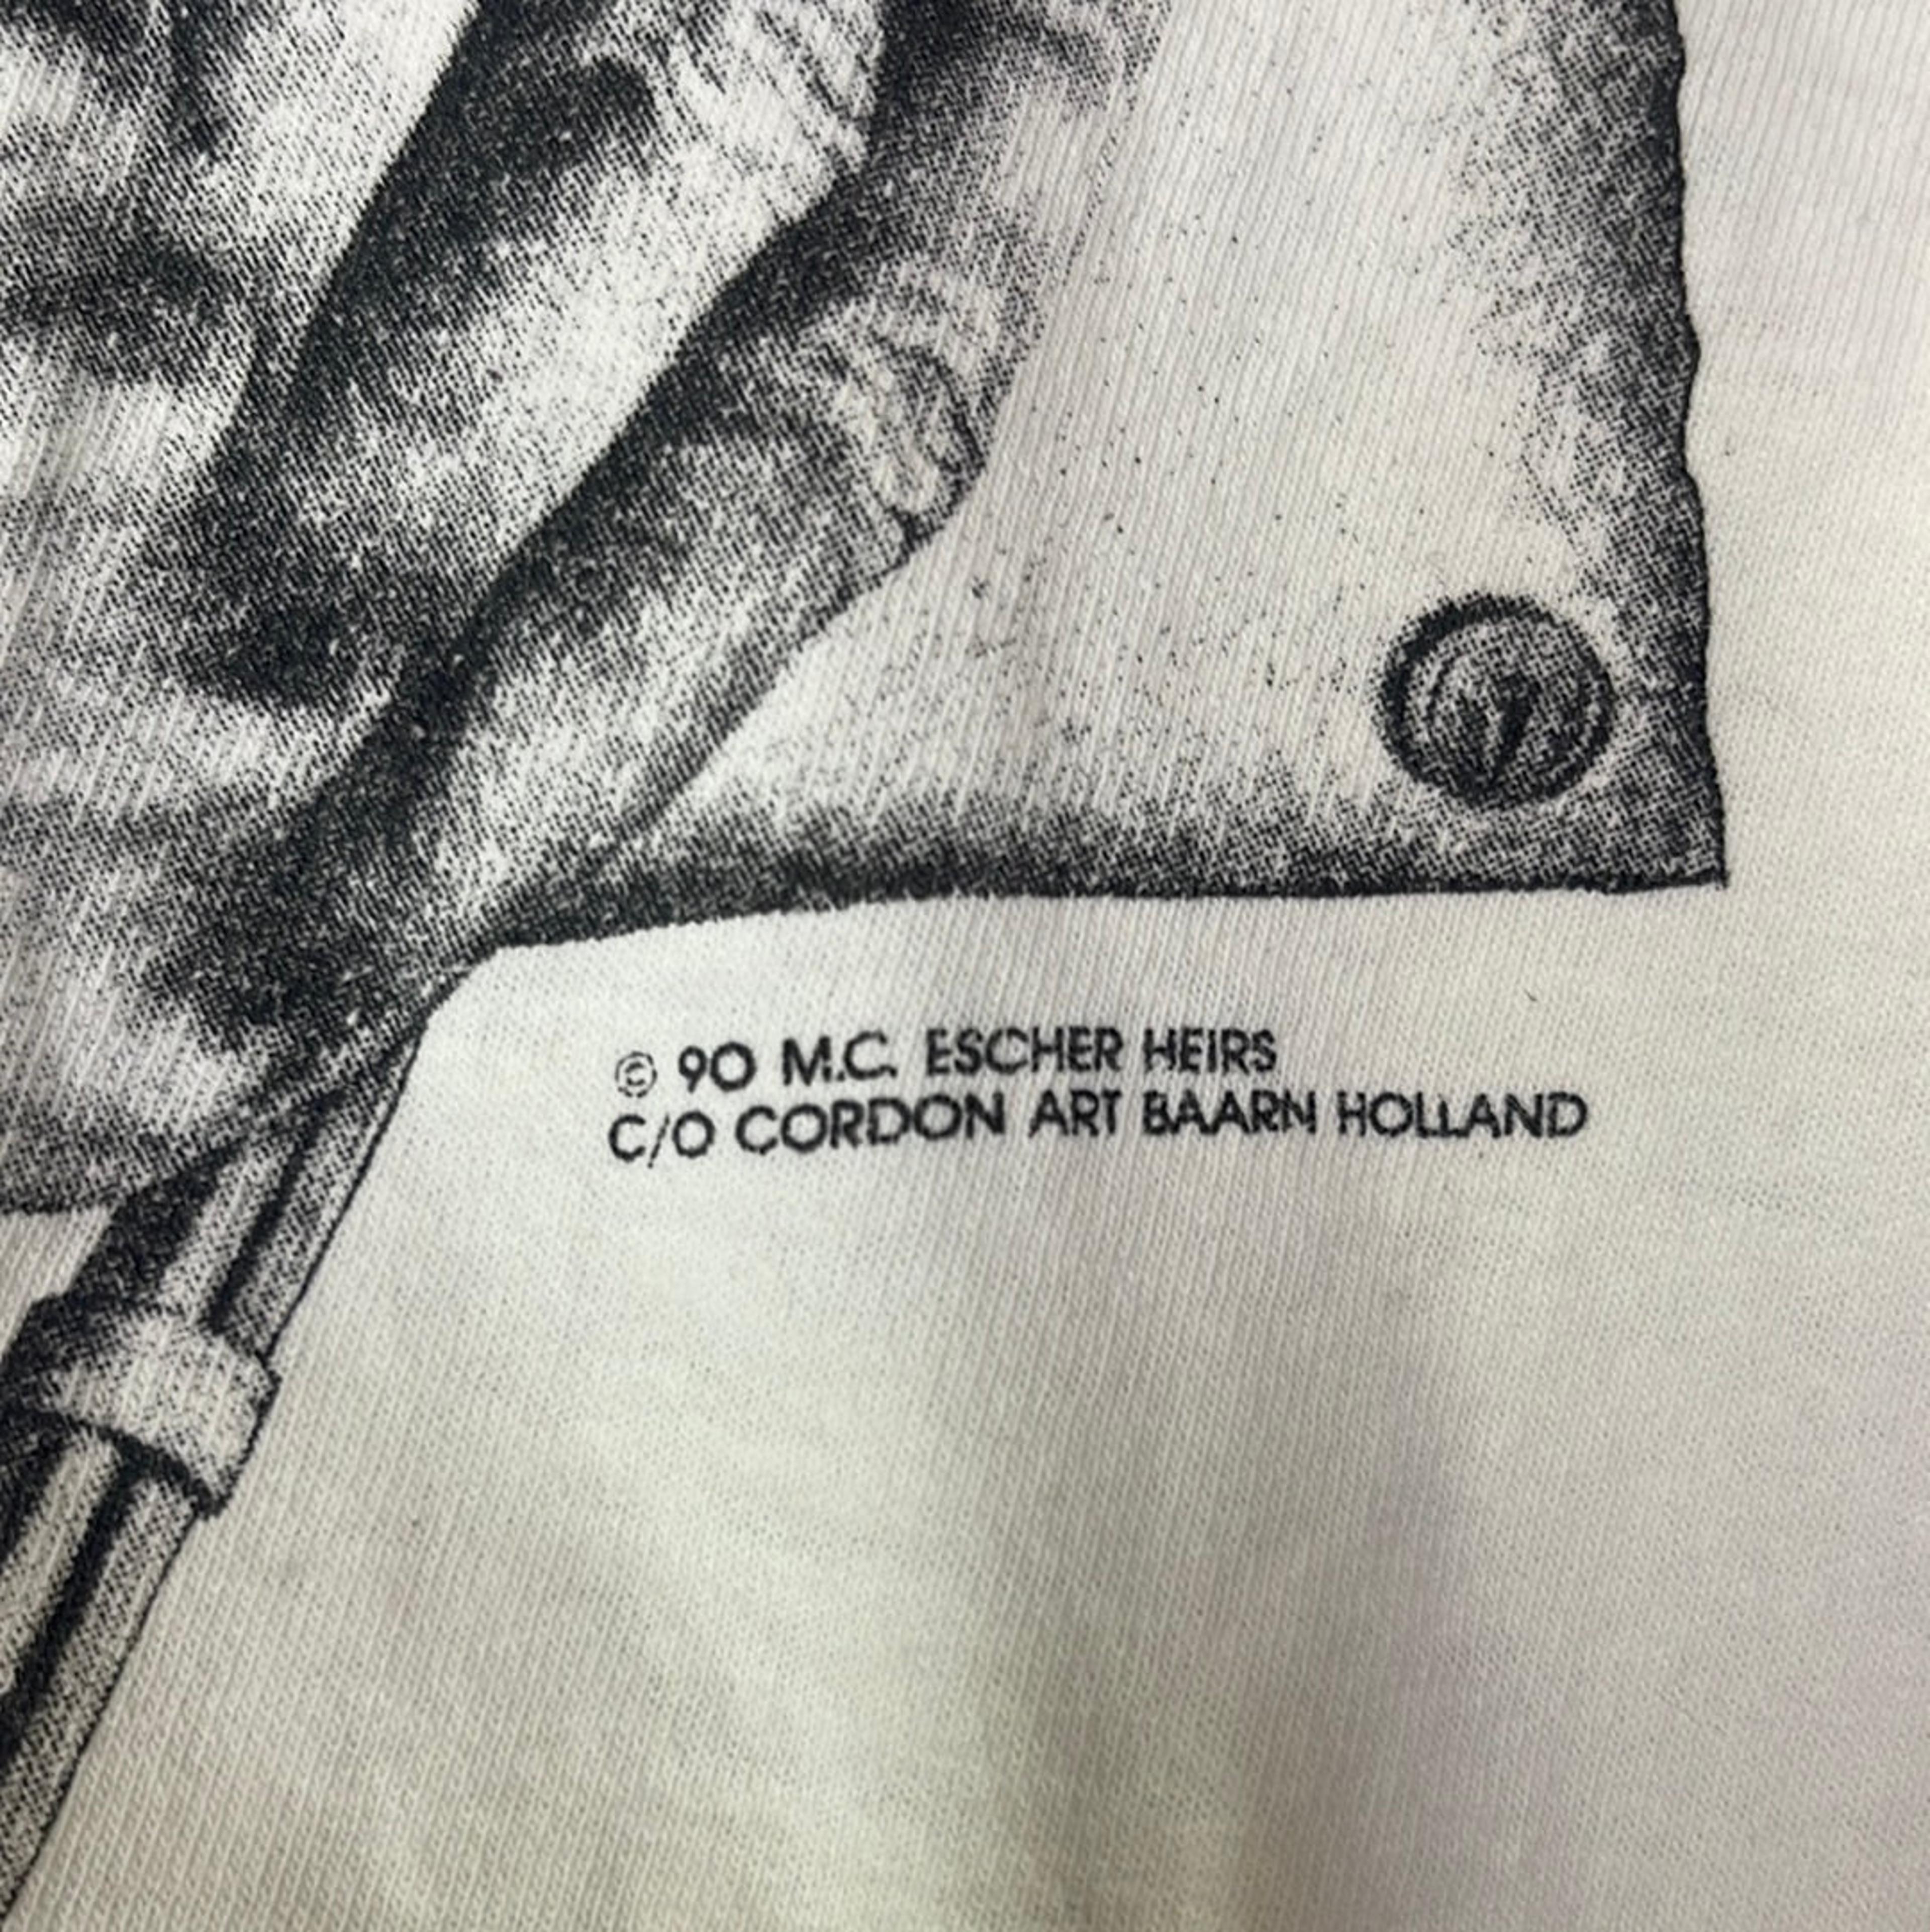 Alternate View 1 of Vintage 1990 M.C. Escher Andazia Shirt Large